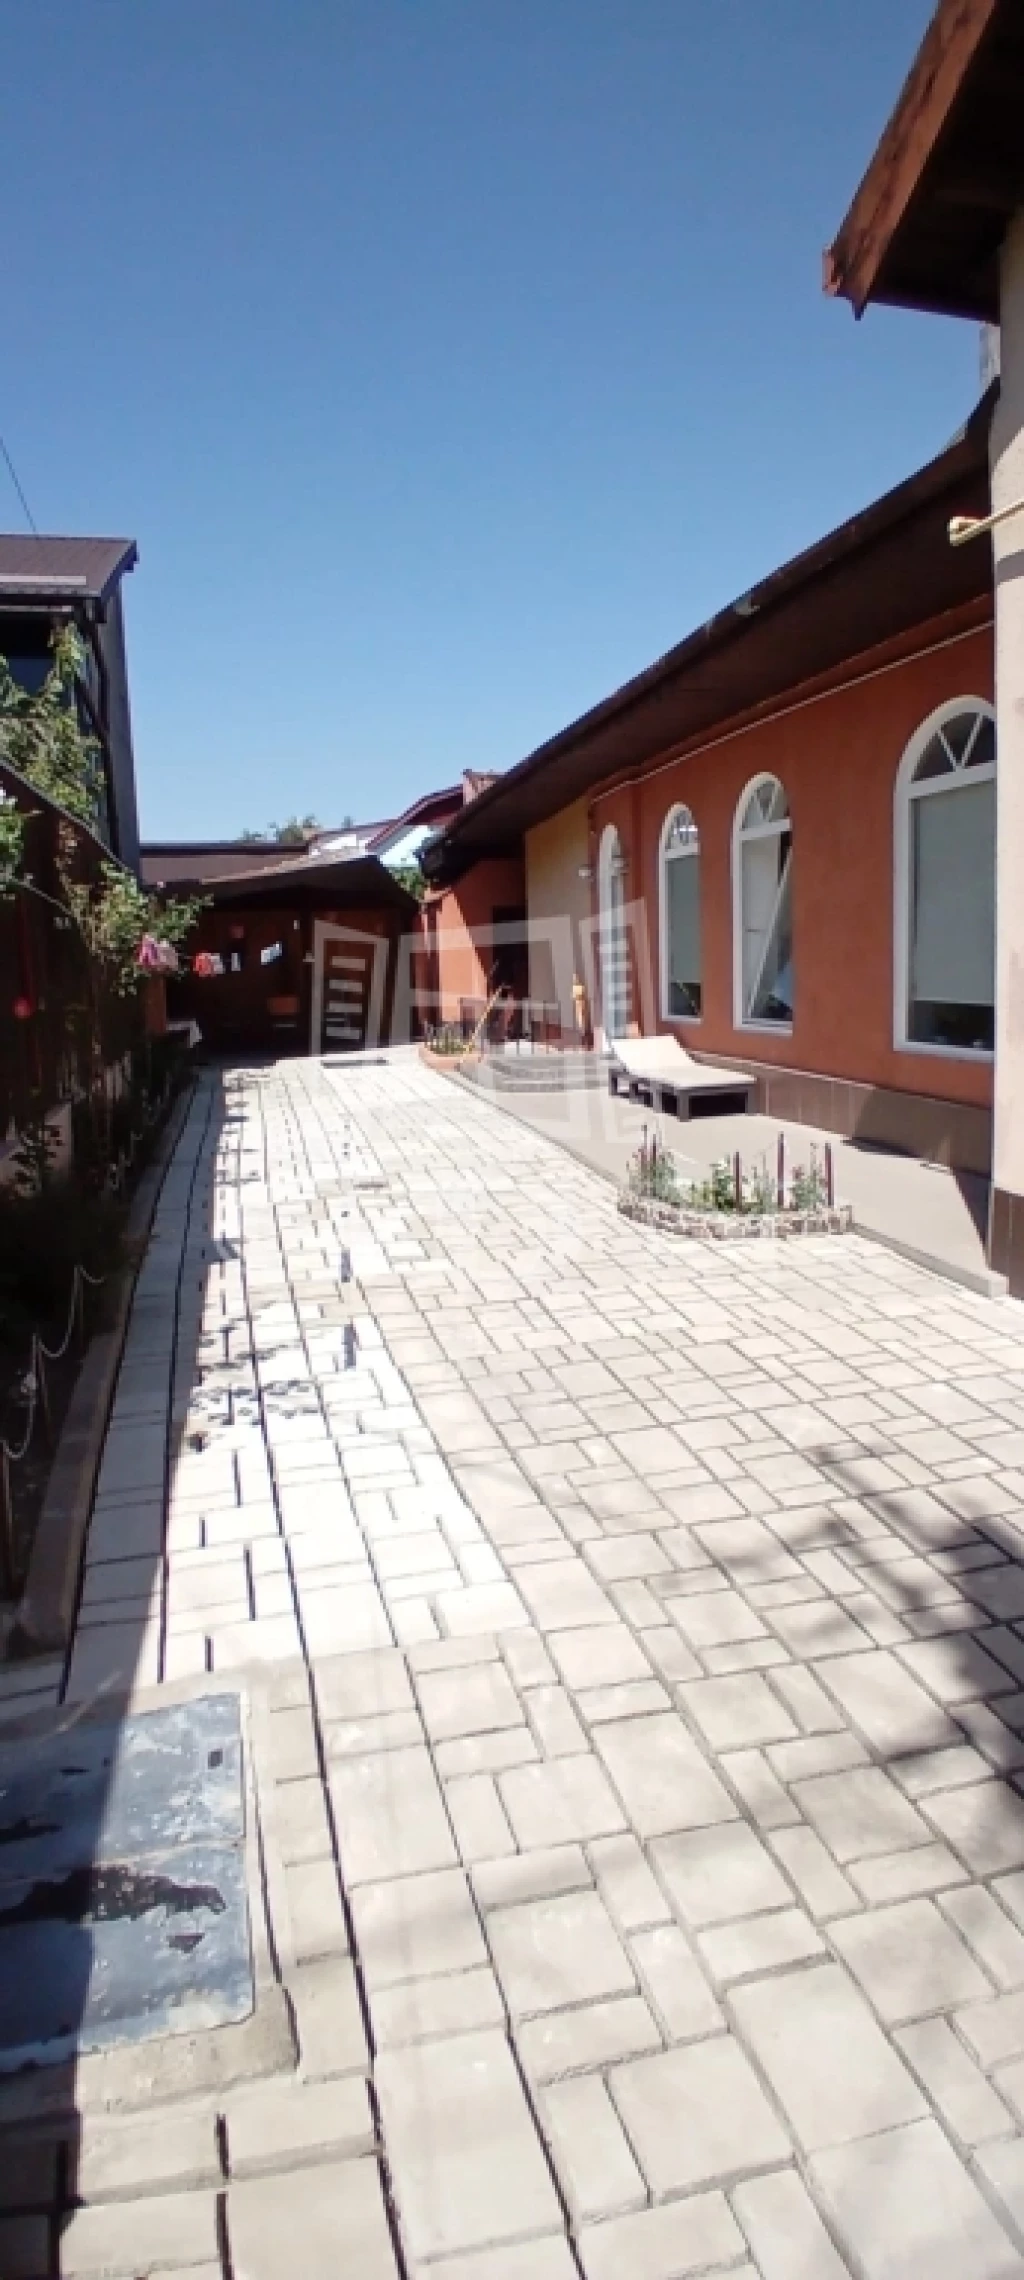 For sale house, Kolozsvár, Mărăști, Zizinului